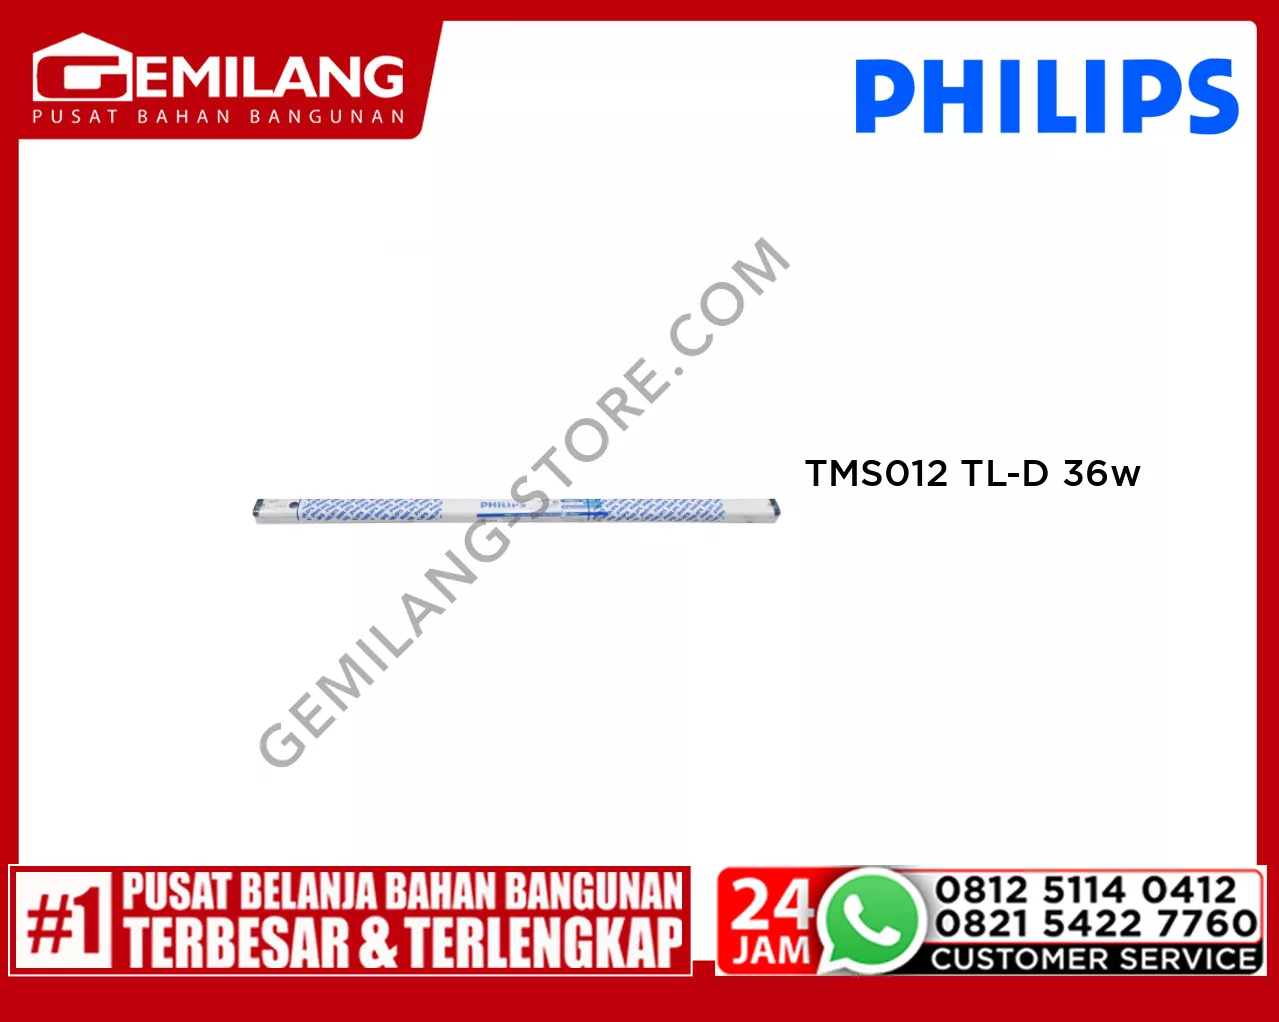 PHILIPS TMS012 1 x TL-D 36w